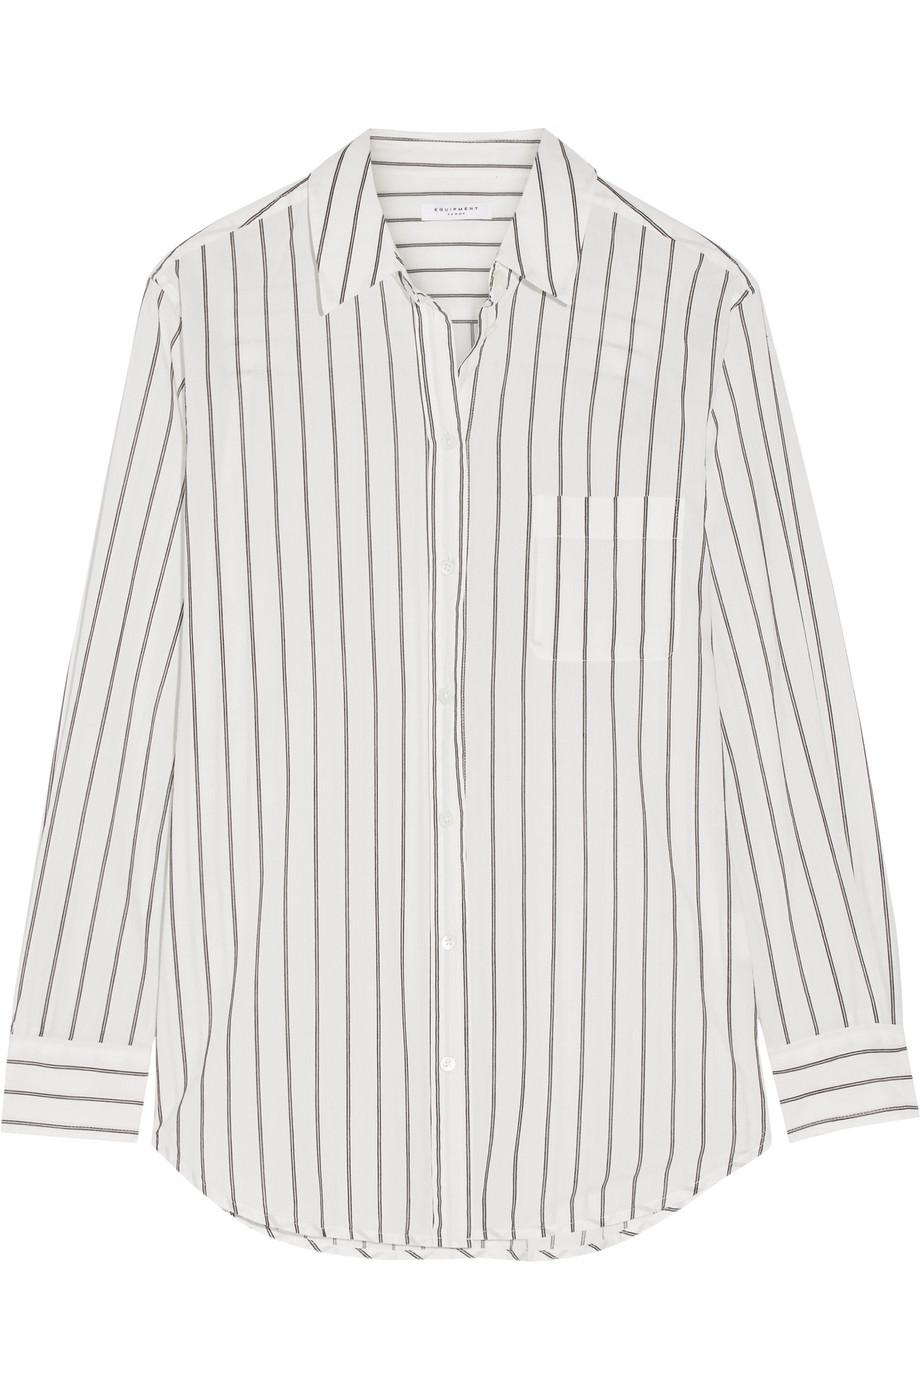 Equipment Kenton Striped Cotton-poplin Shirt | ModeSens